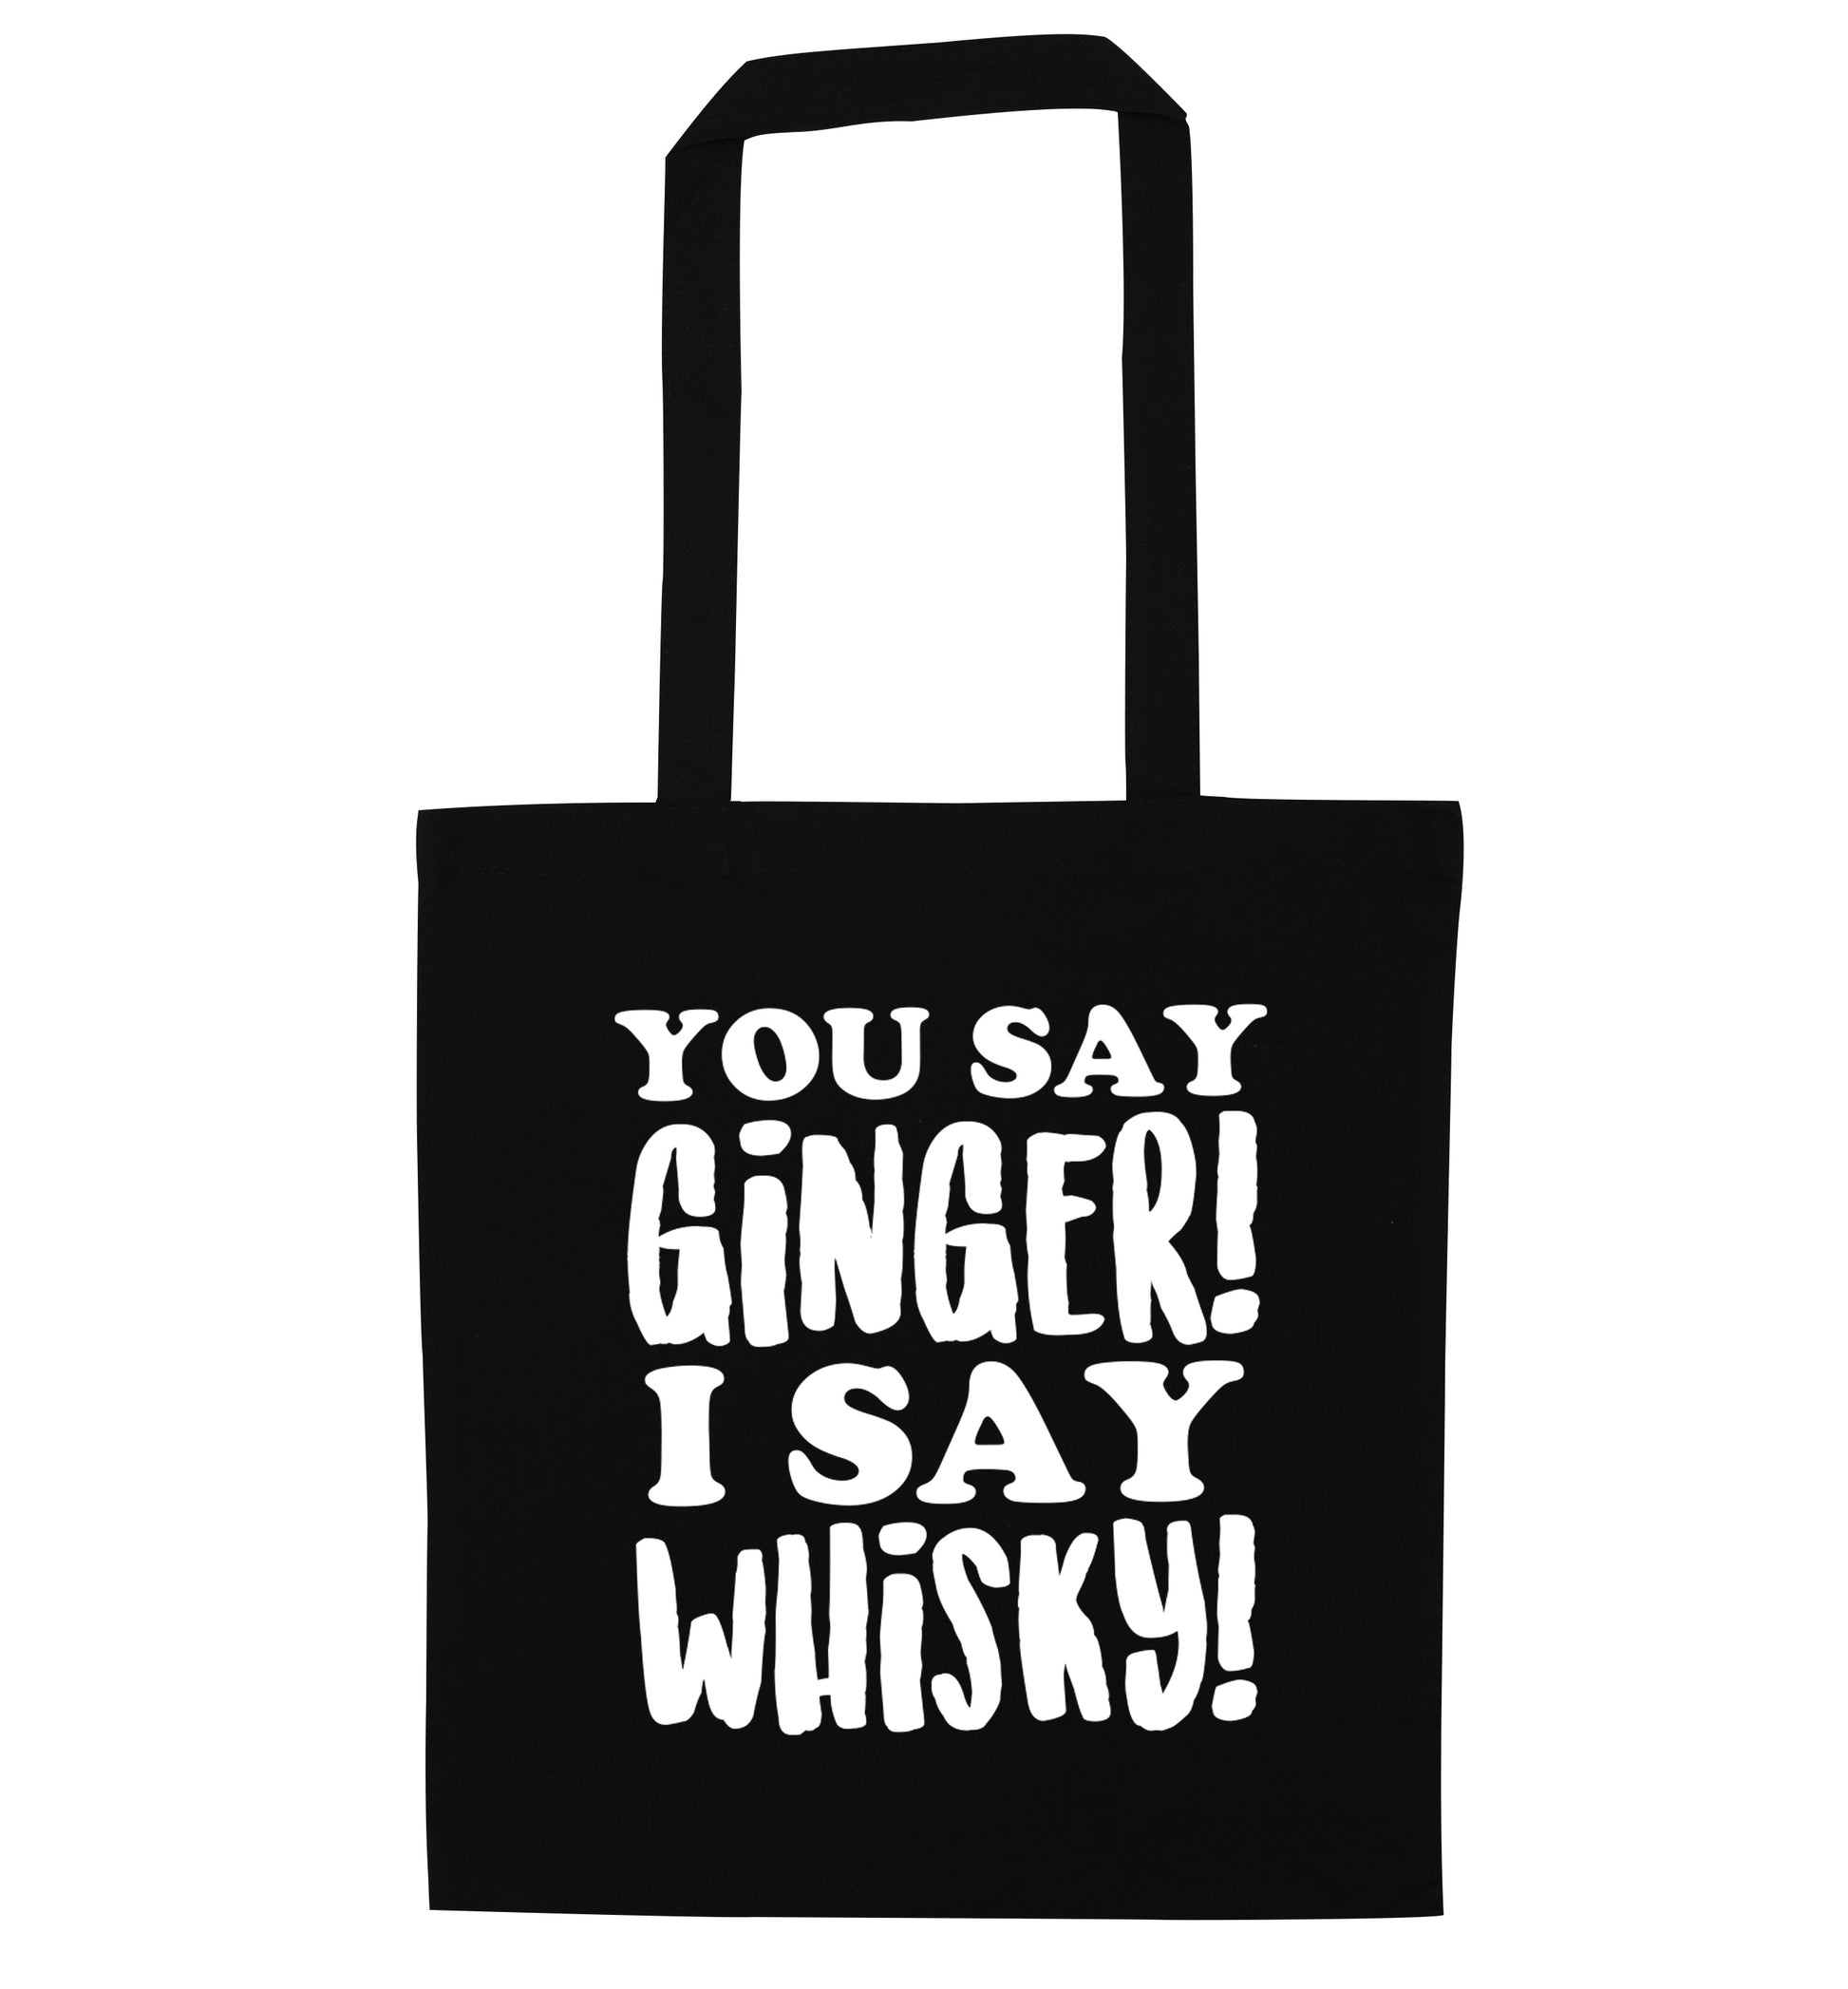 You say ginger I say whisky! black tote bag